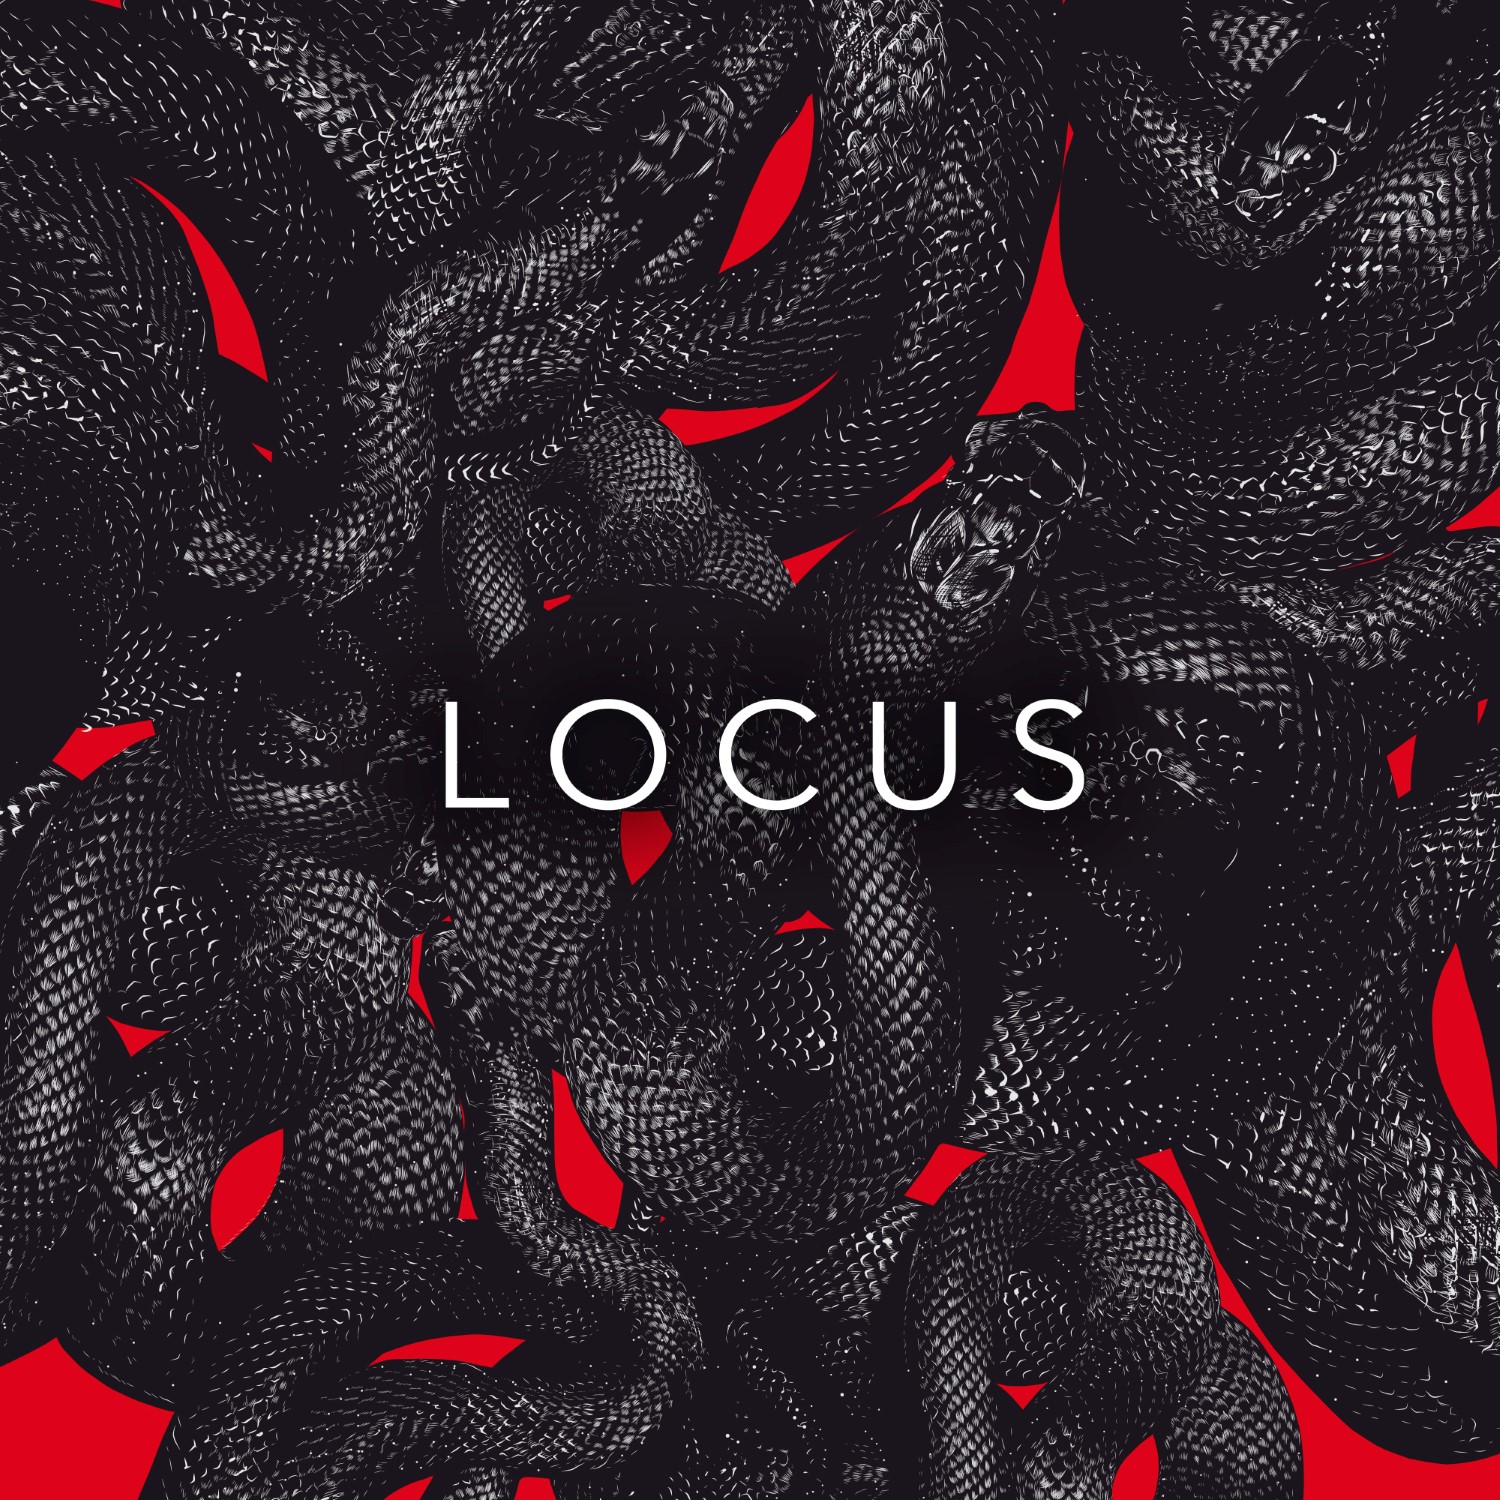 Locus (Ficha y tracklist)